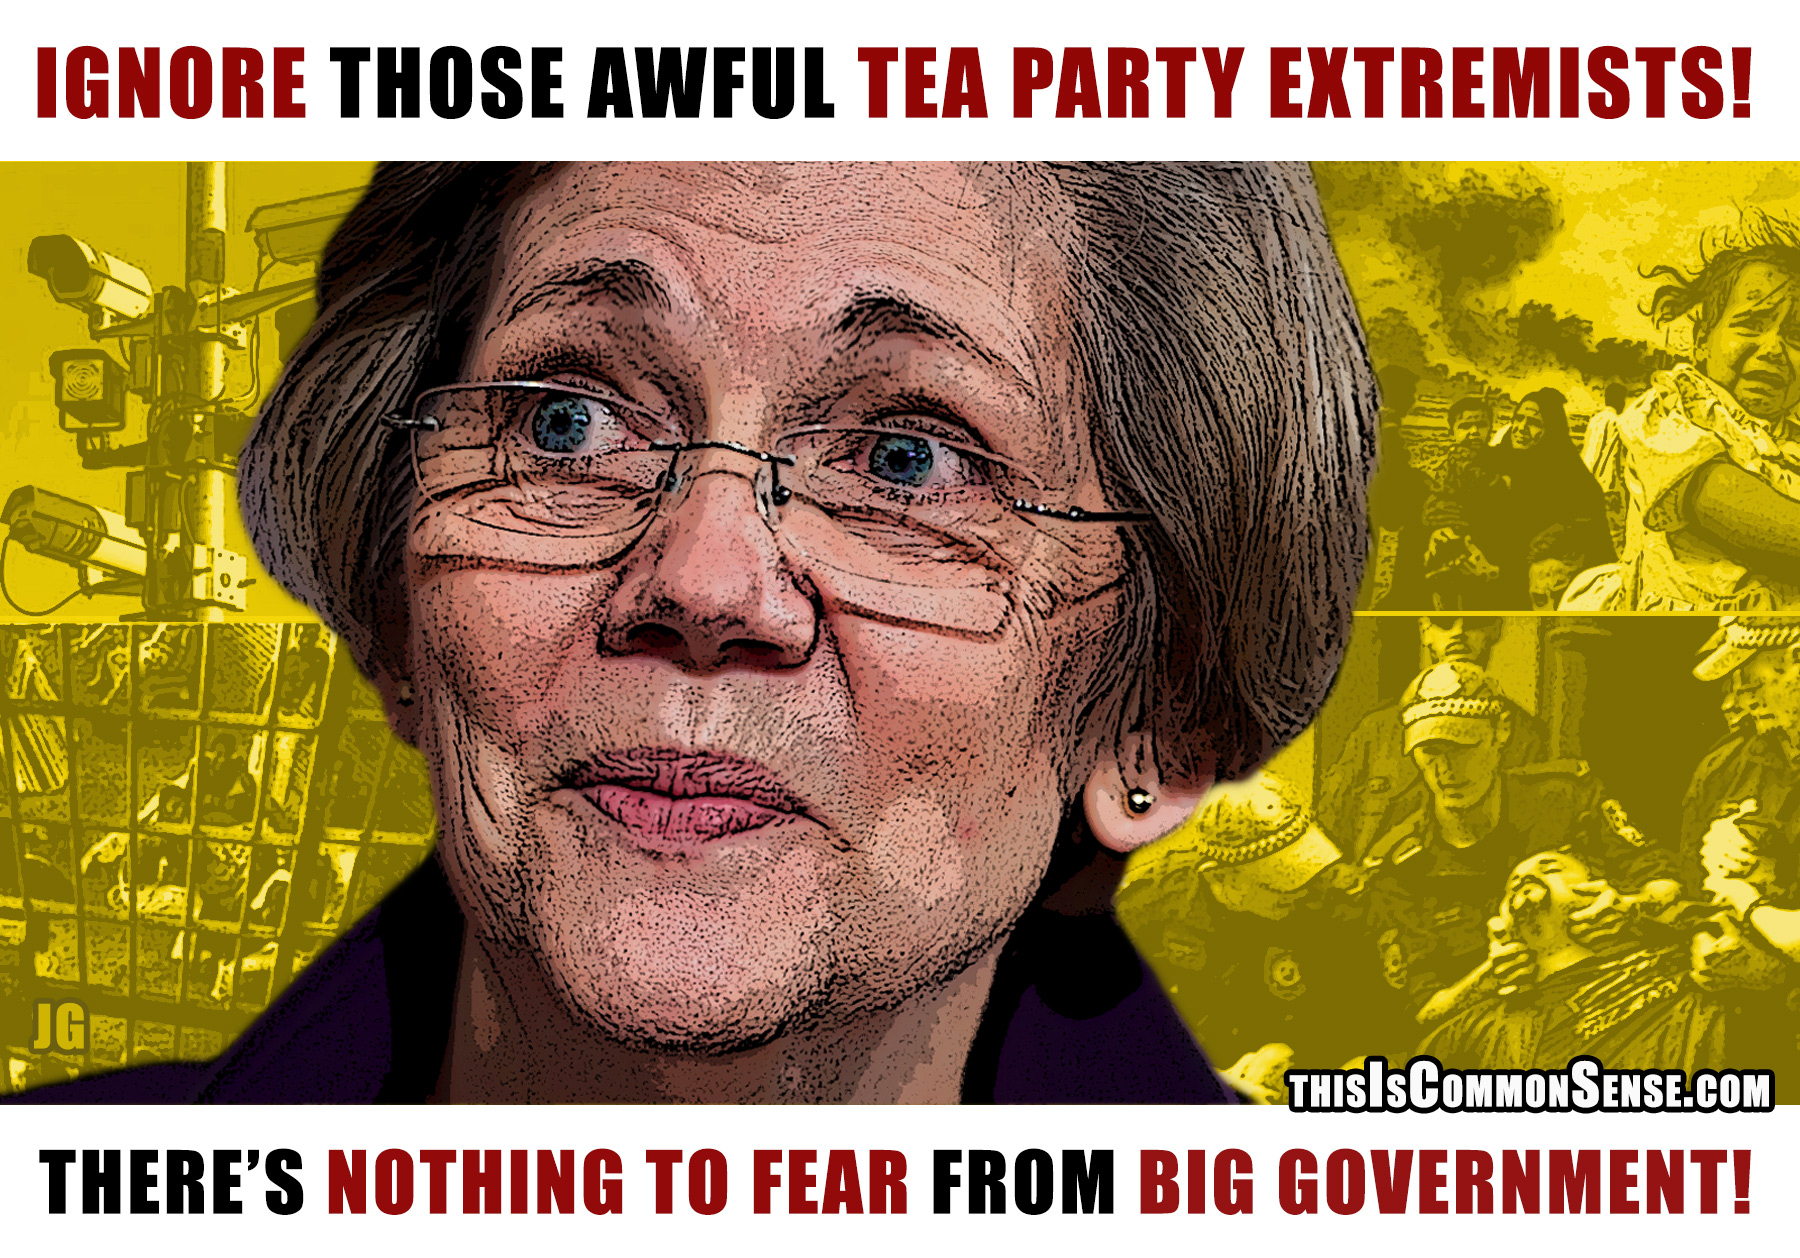 Elizabeth Warren, Extremists, extremism, Tea Party, Big Government, Statism, collage, photomontage, illustration, Jim Gill, Paul Jacob, Common Sense, meme, memes